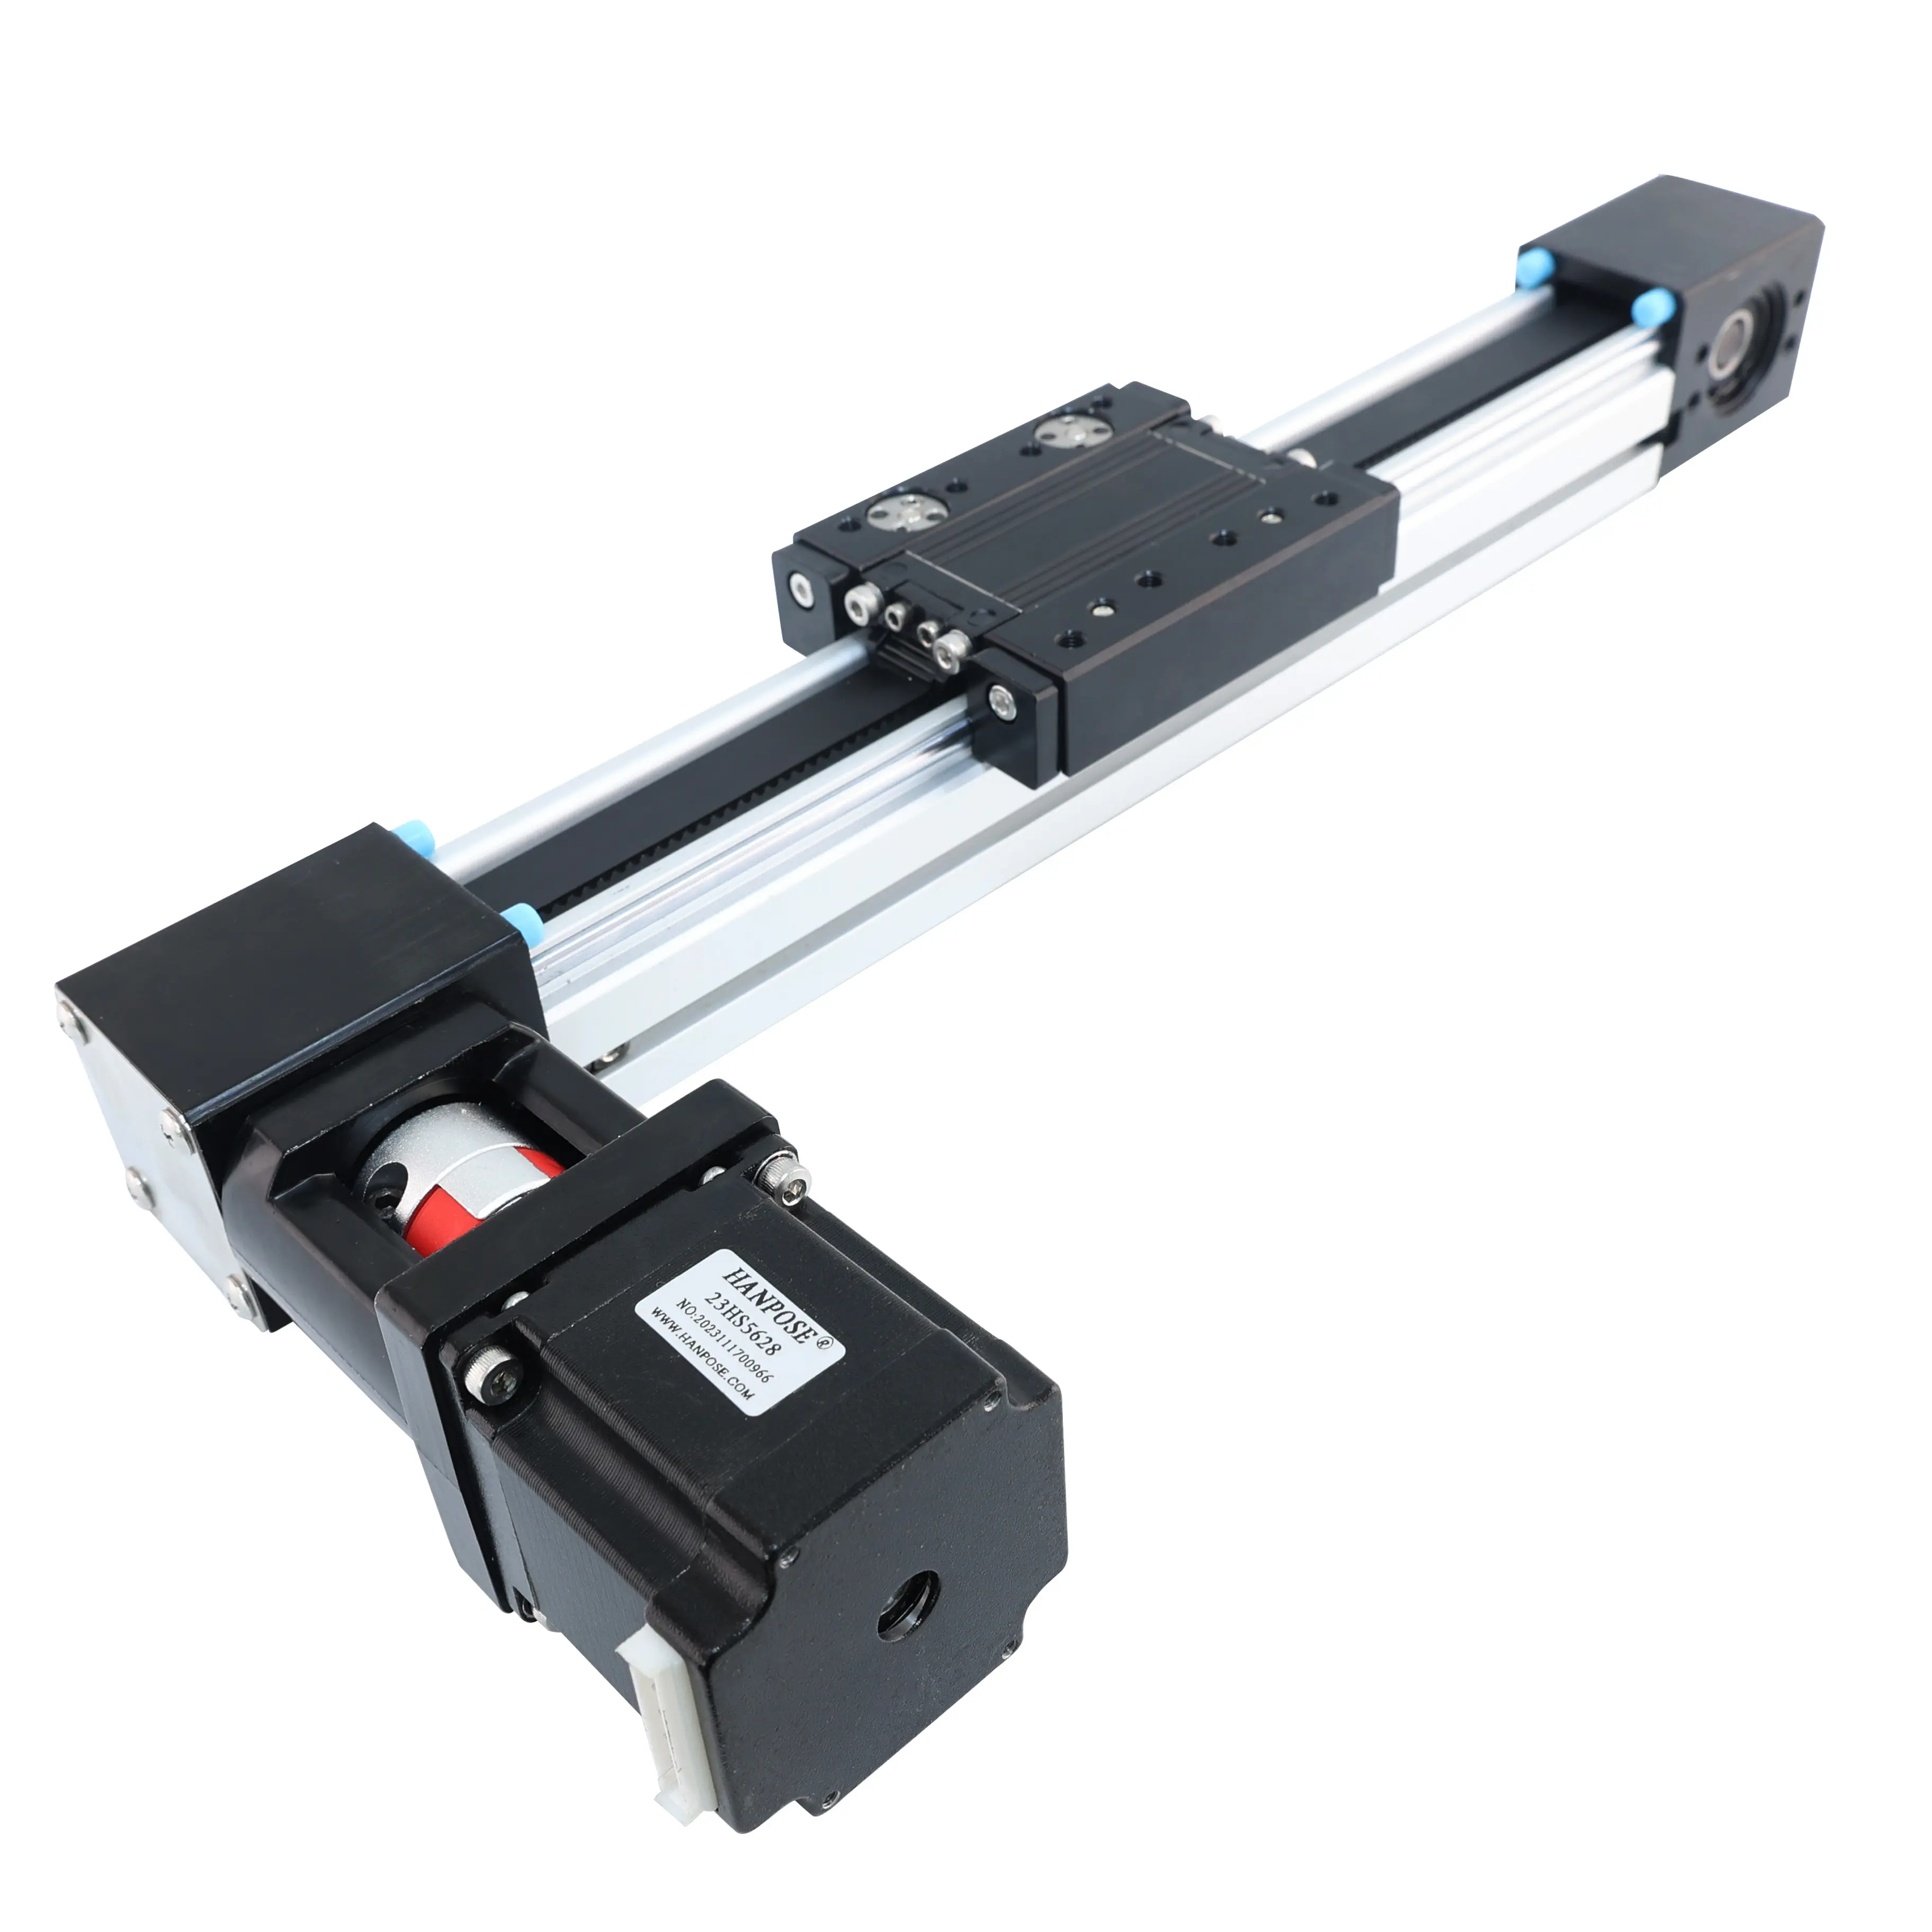 Effective Travel Stroke Length 300mm Timing Belt Linear Slide Guide Motion Module for 3D printer HPVB45 Linear guide module CNC